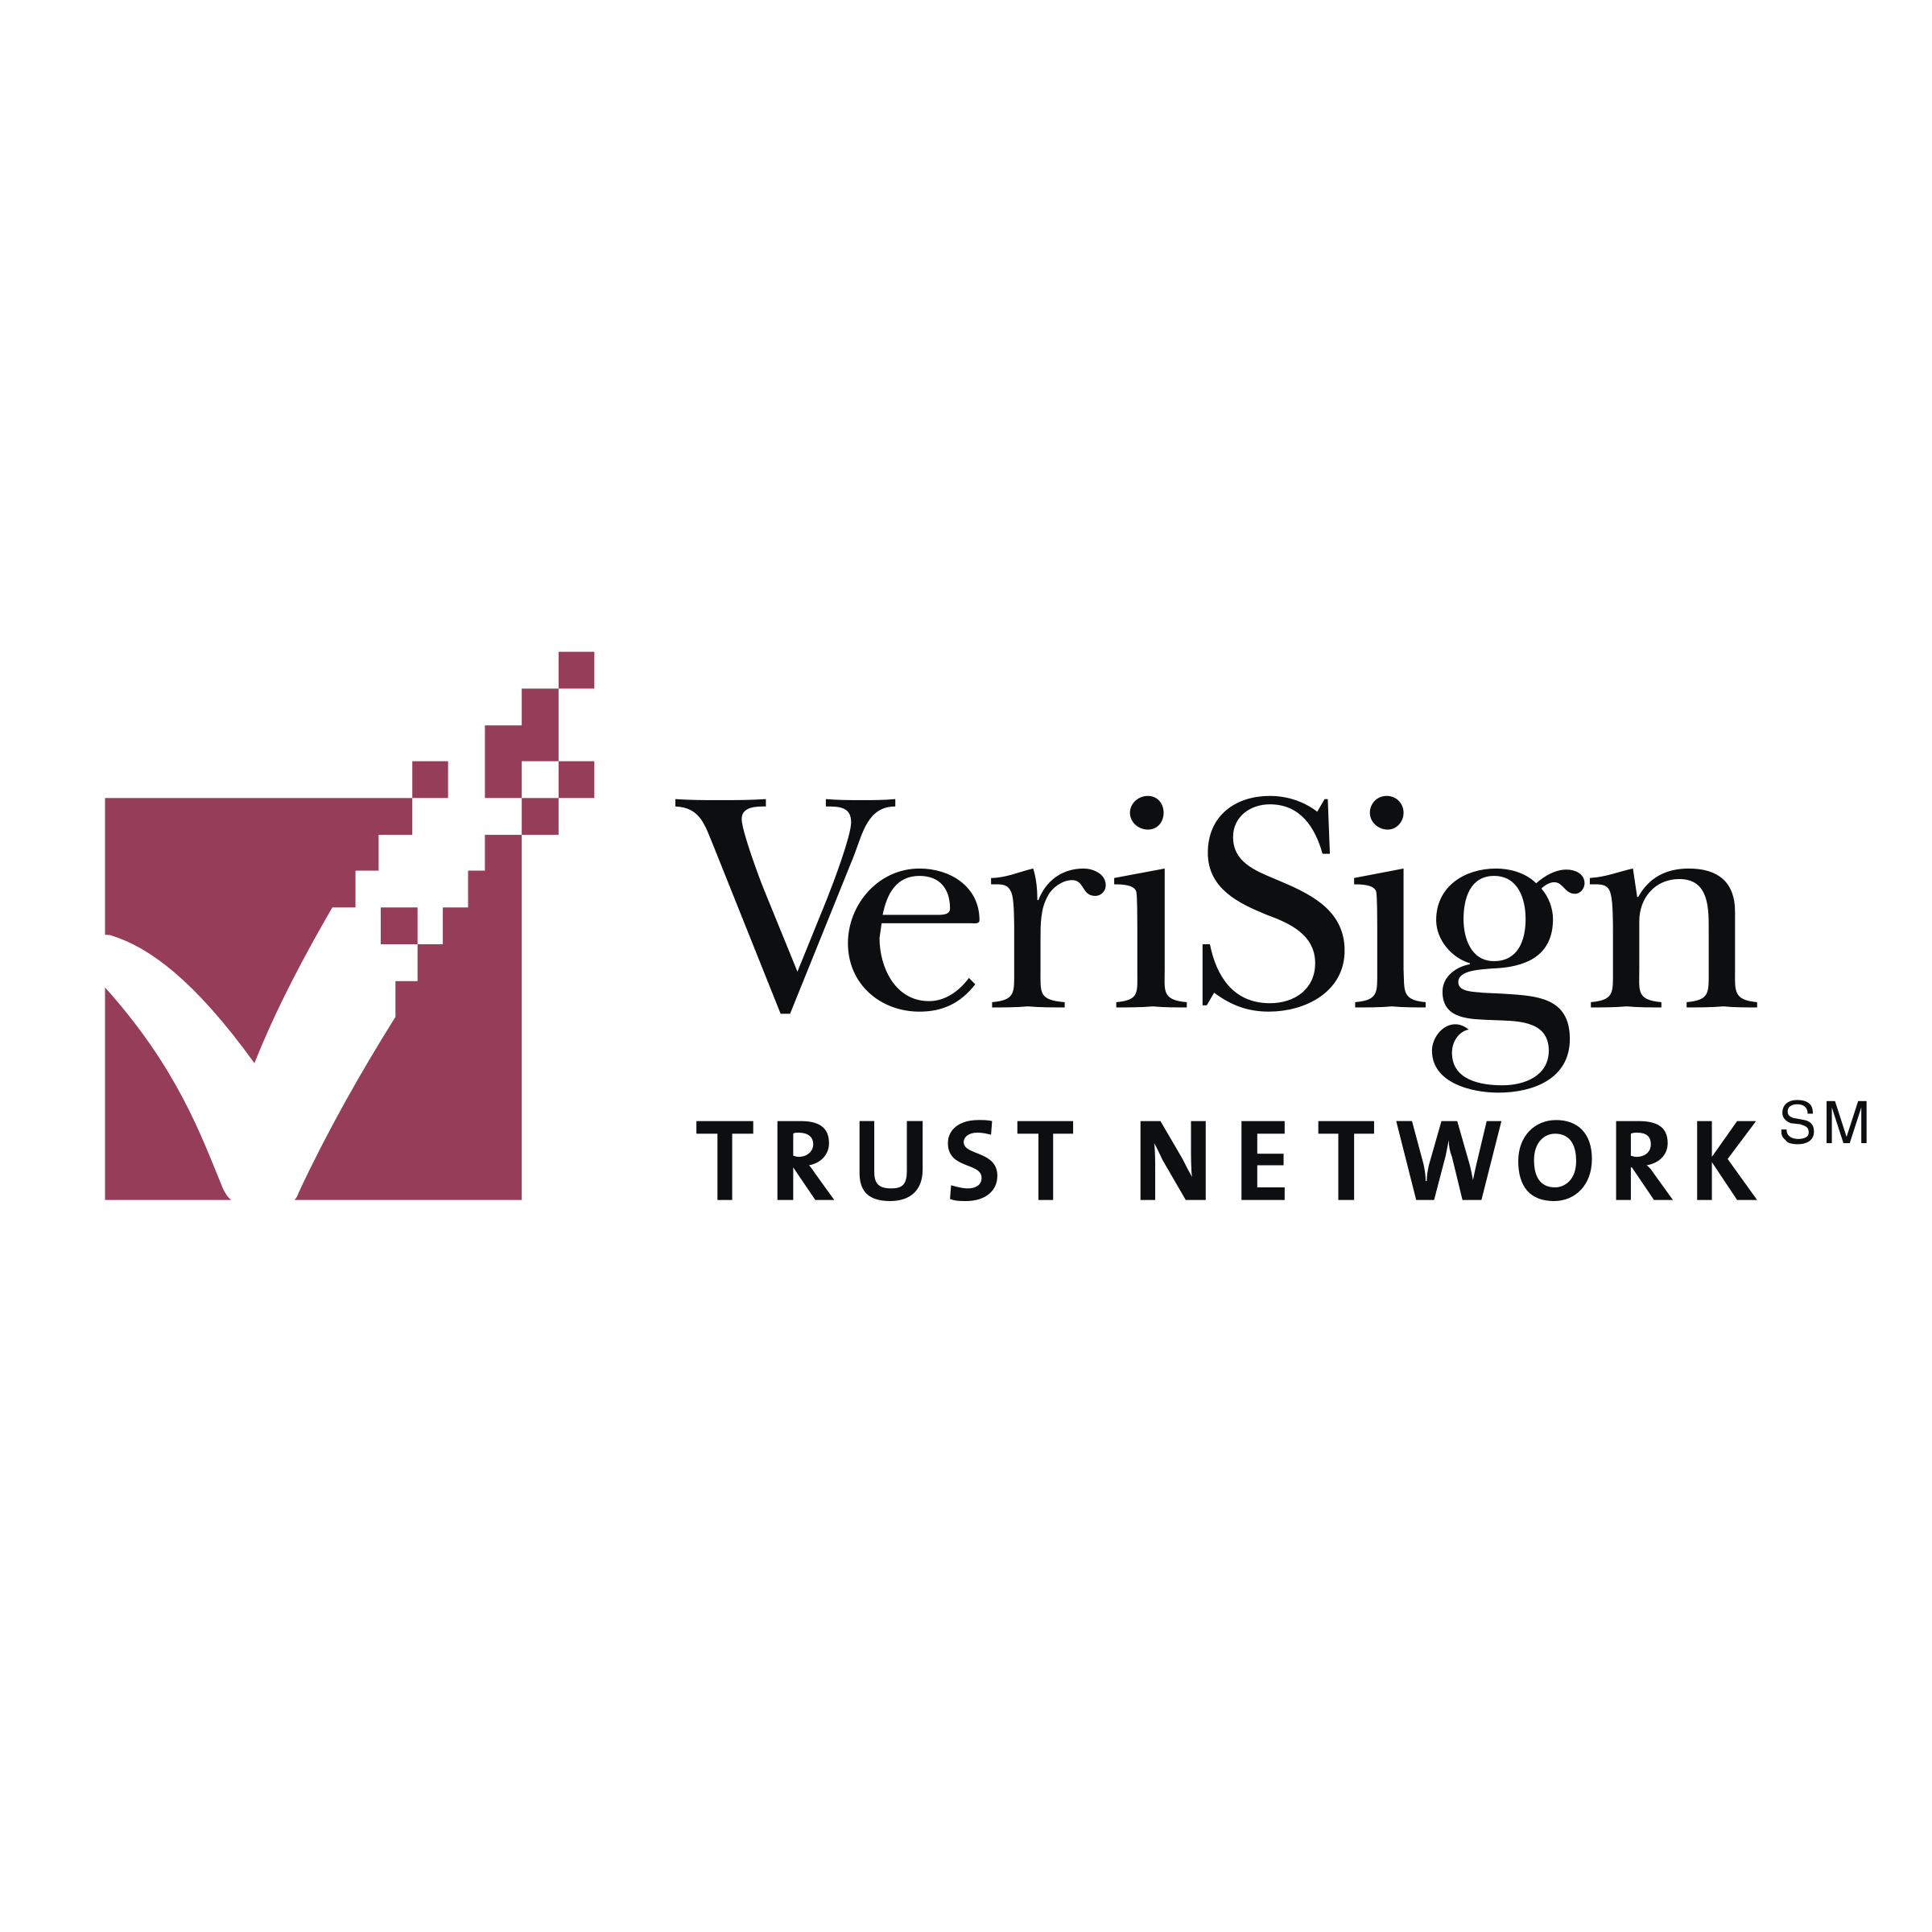 VeriSign Logo - VeriSign Logo PNG Transparent & SVG Vector - Freebie Supply